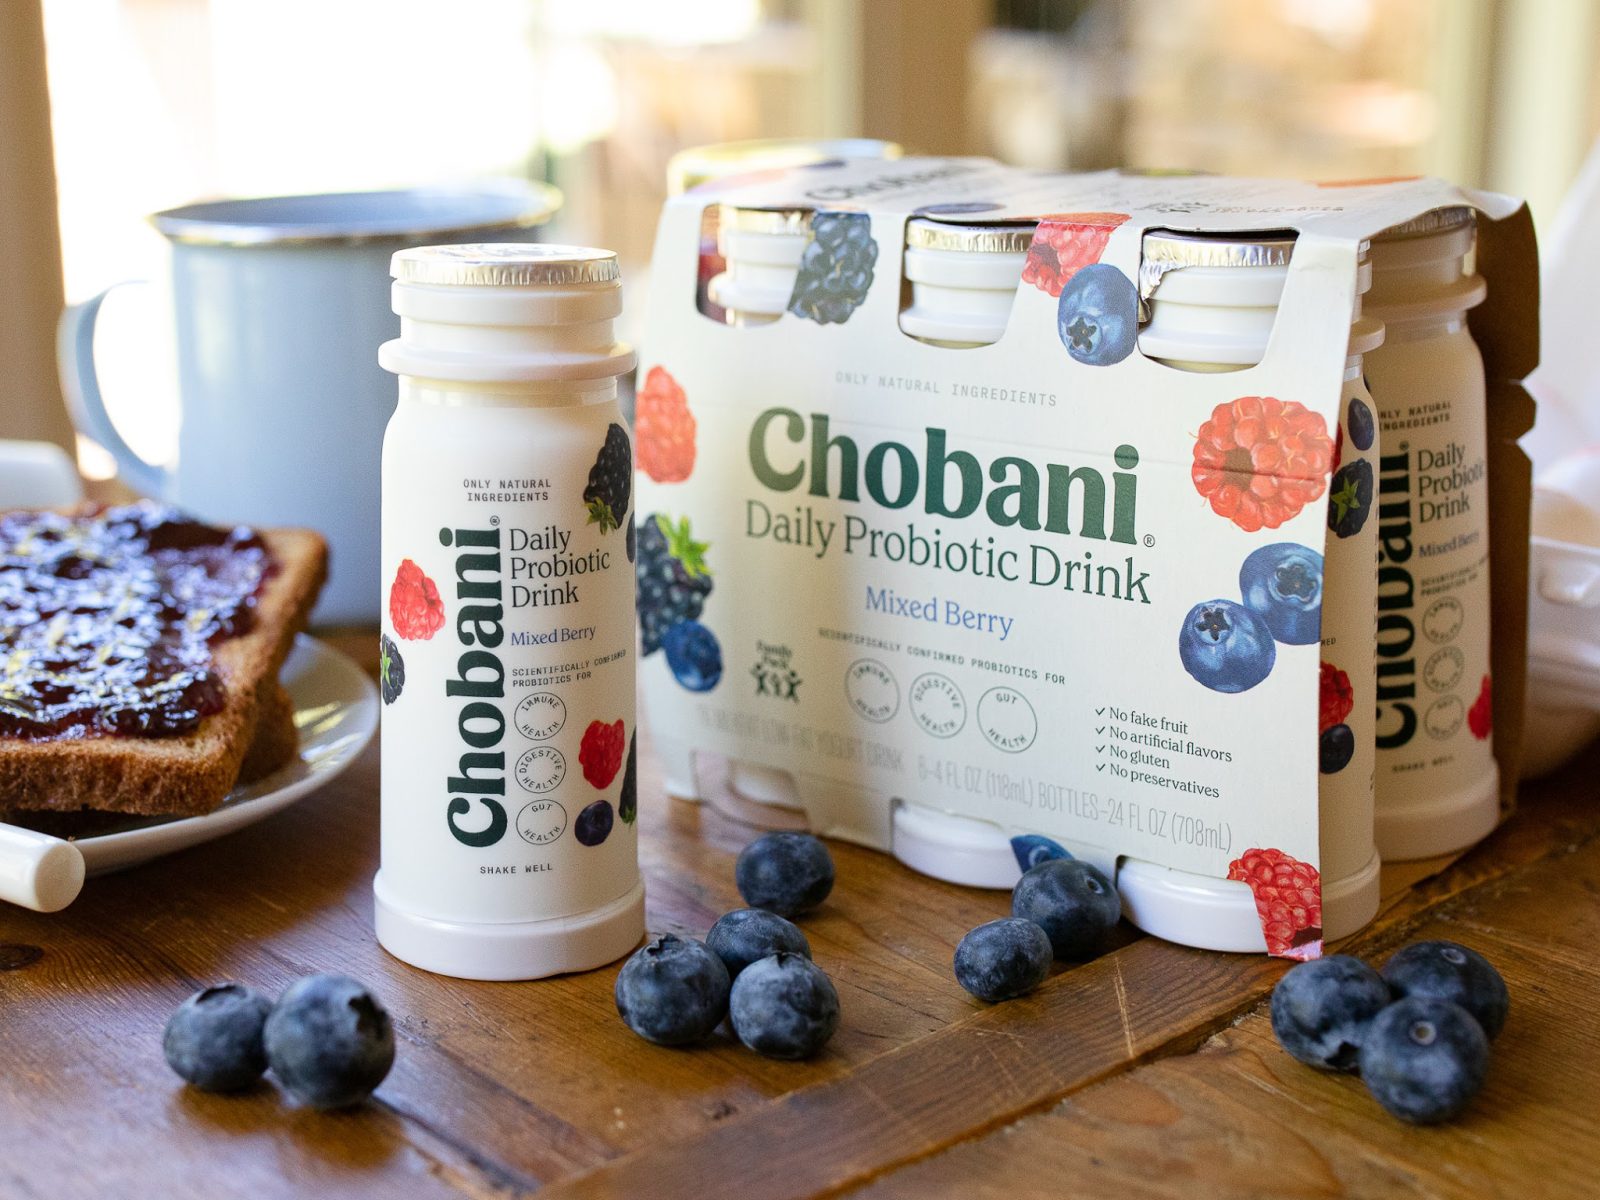 Chobani Daily Probiotic Drink Just $2.50 Per Pack – 42¢ Per Serving